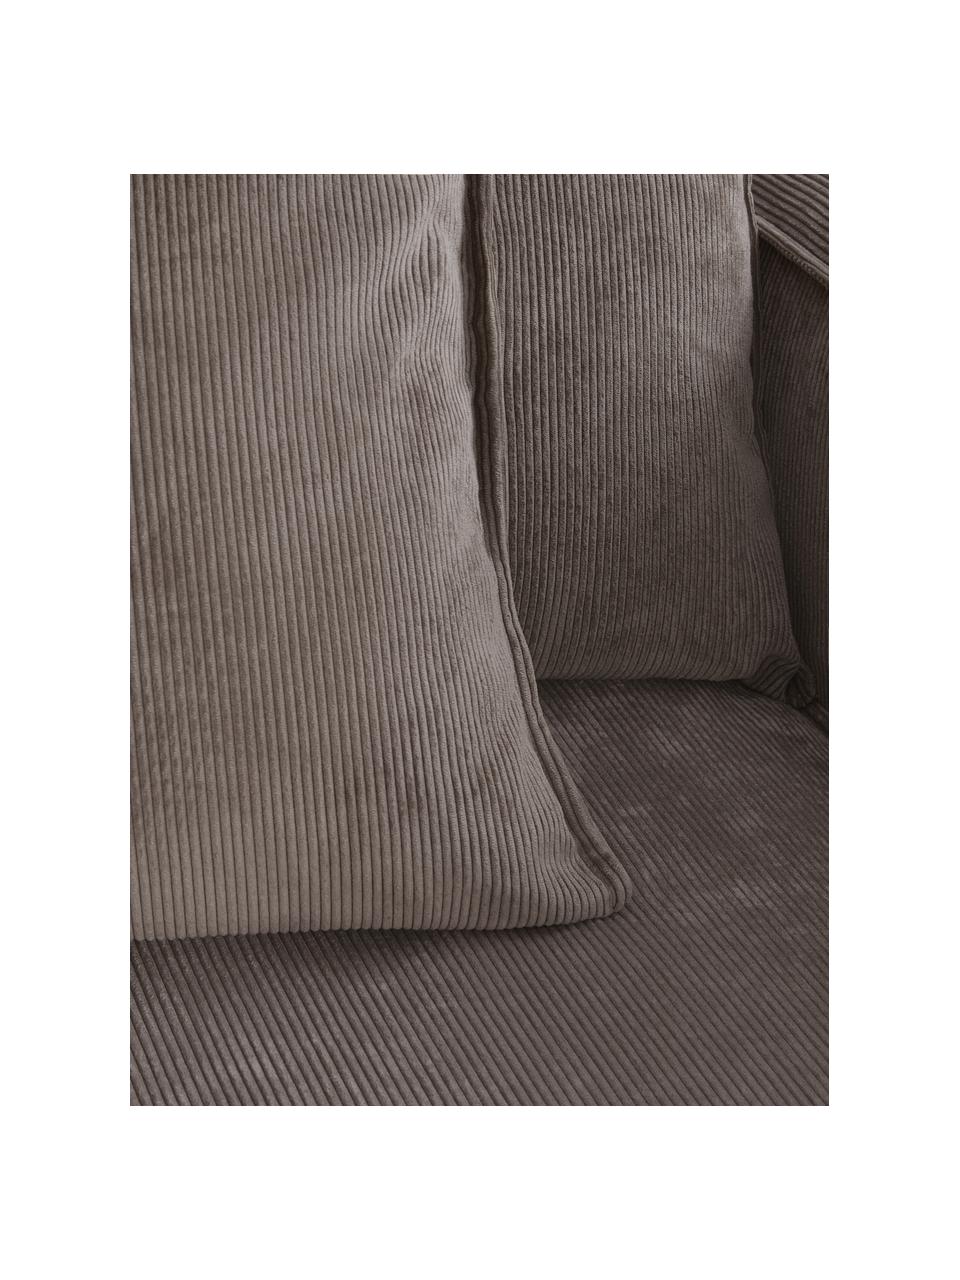 Sofa-Kissen Lennon aus Cord, Bezug: Cord (92% Polyester, 8% P, Cord Braun, B 60 x L 60 cm